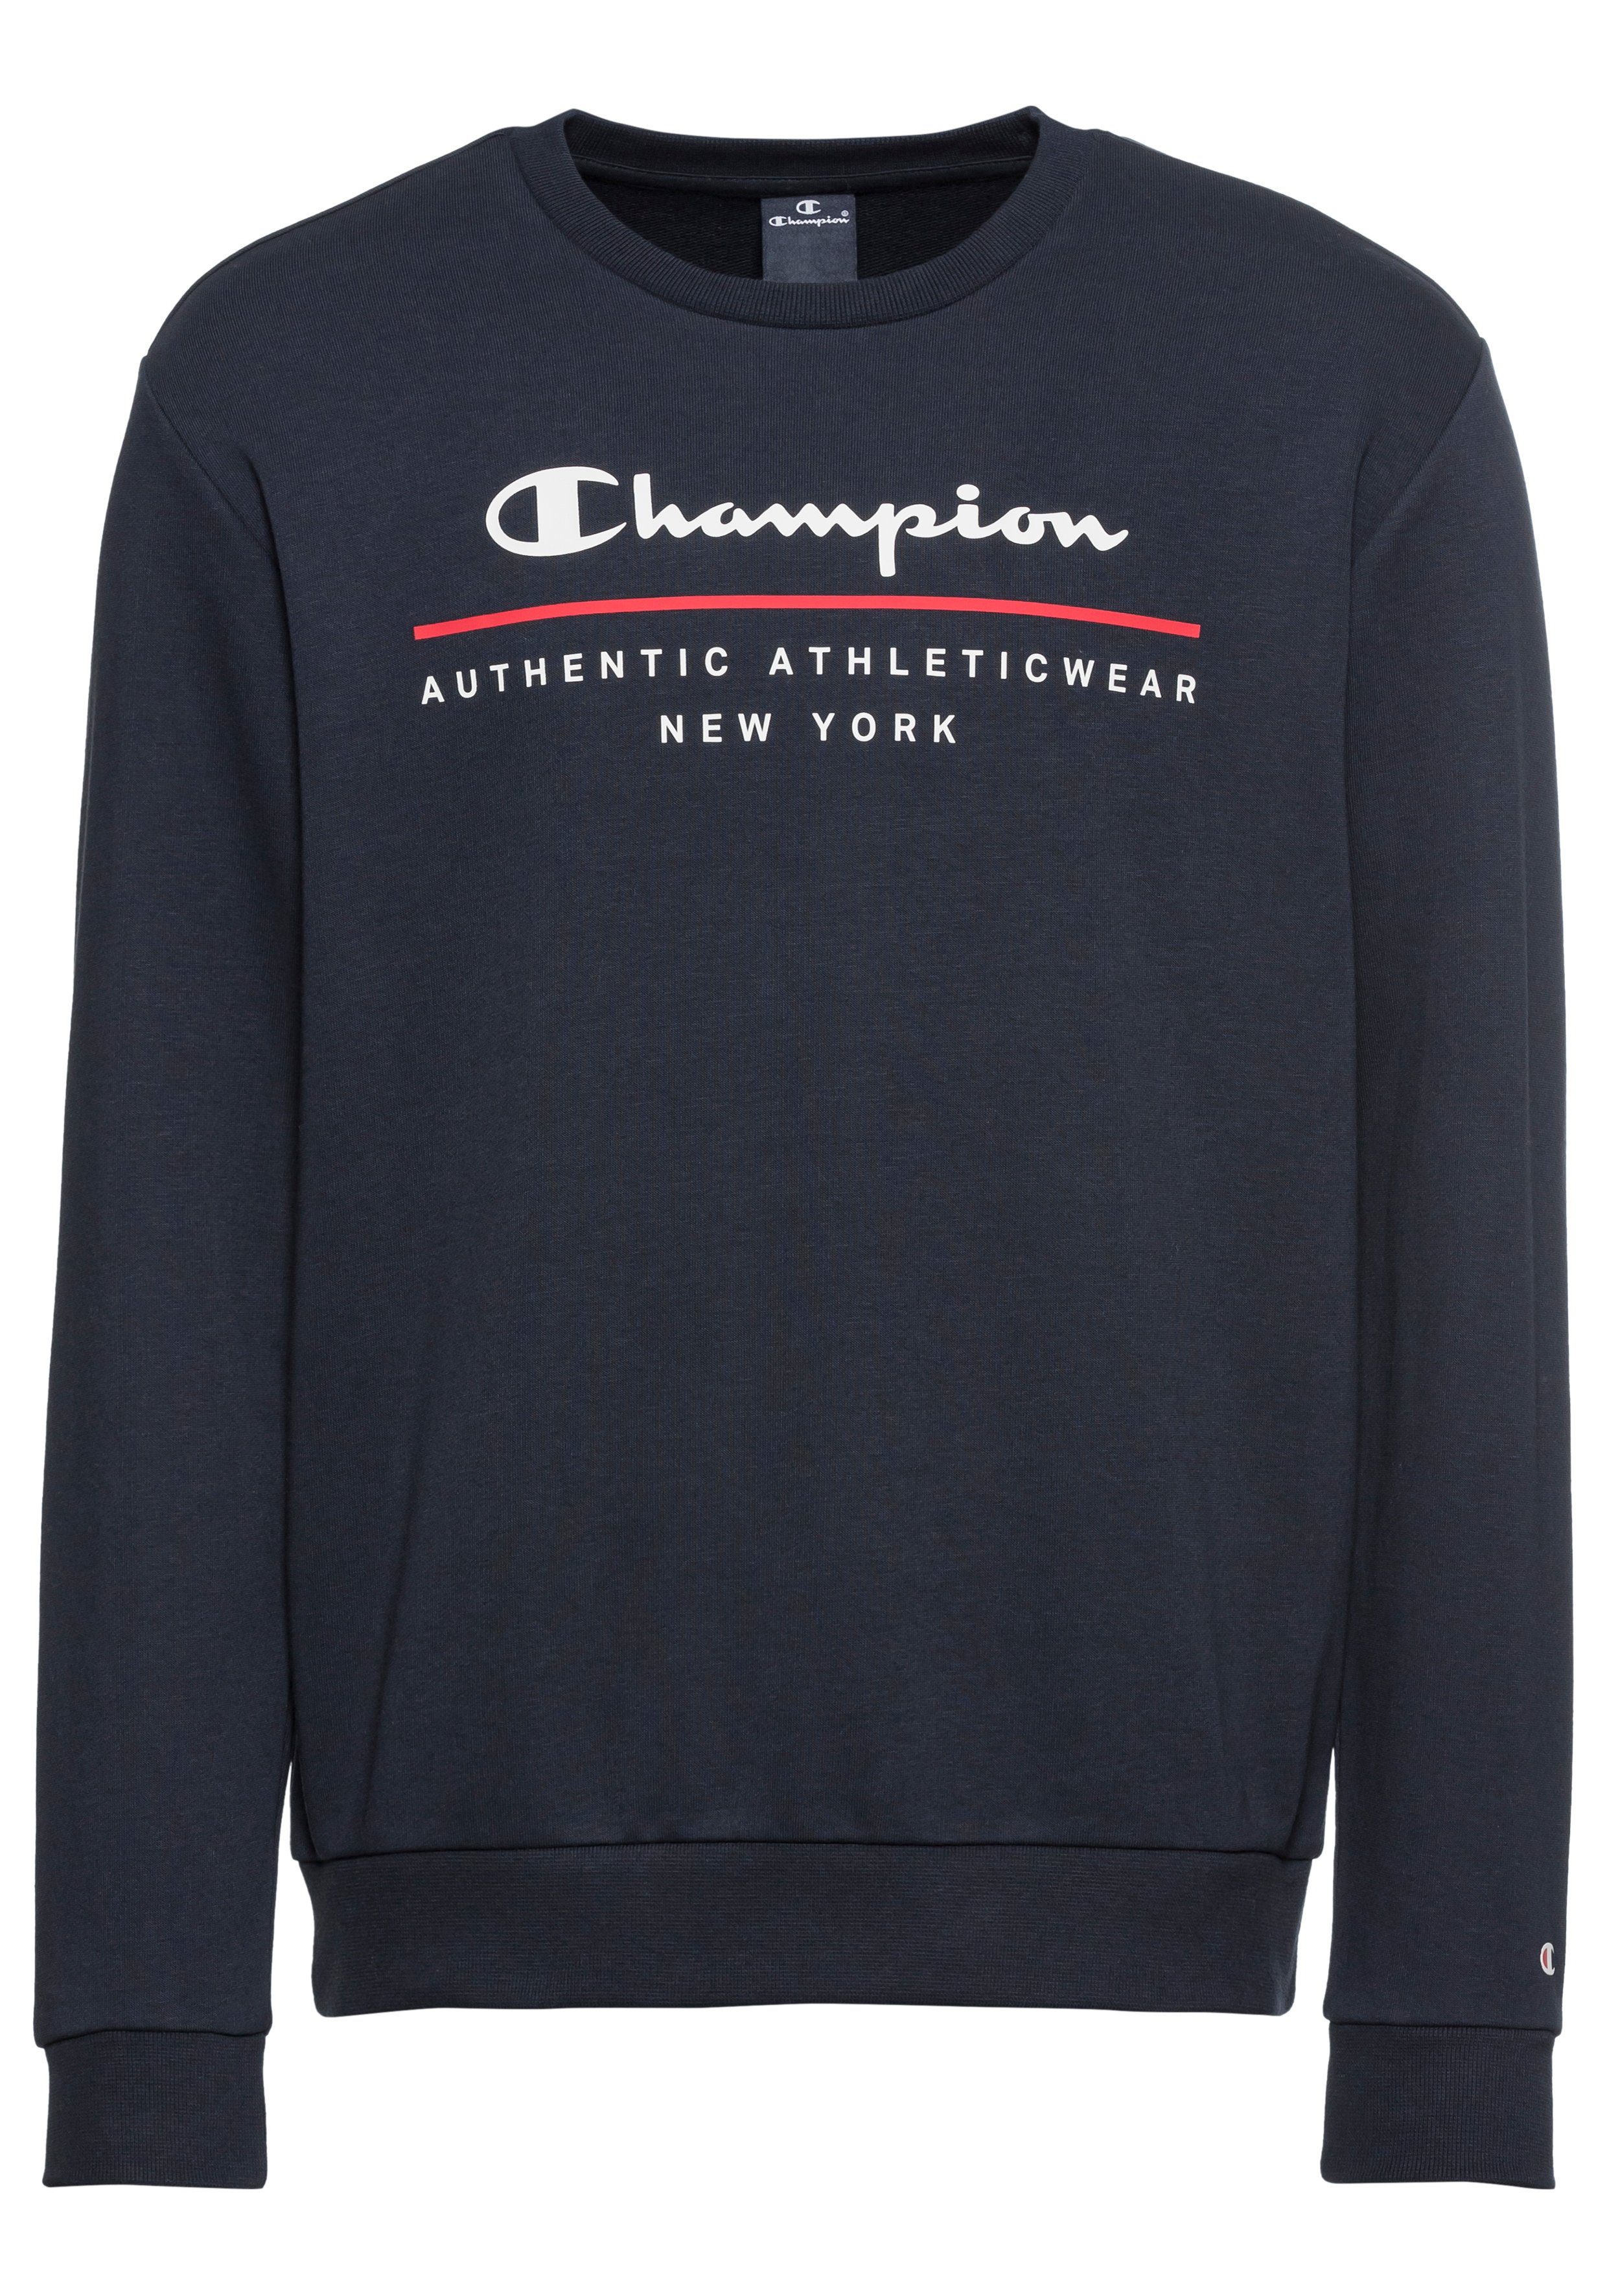 Champion Sweatshirt Graphic Shop Crewneck Sweatshirt